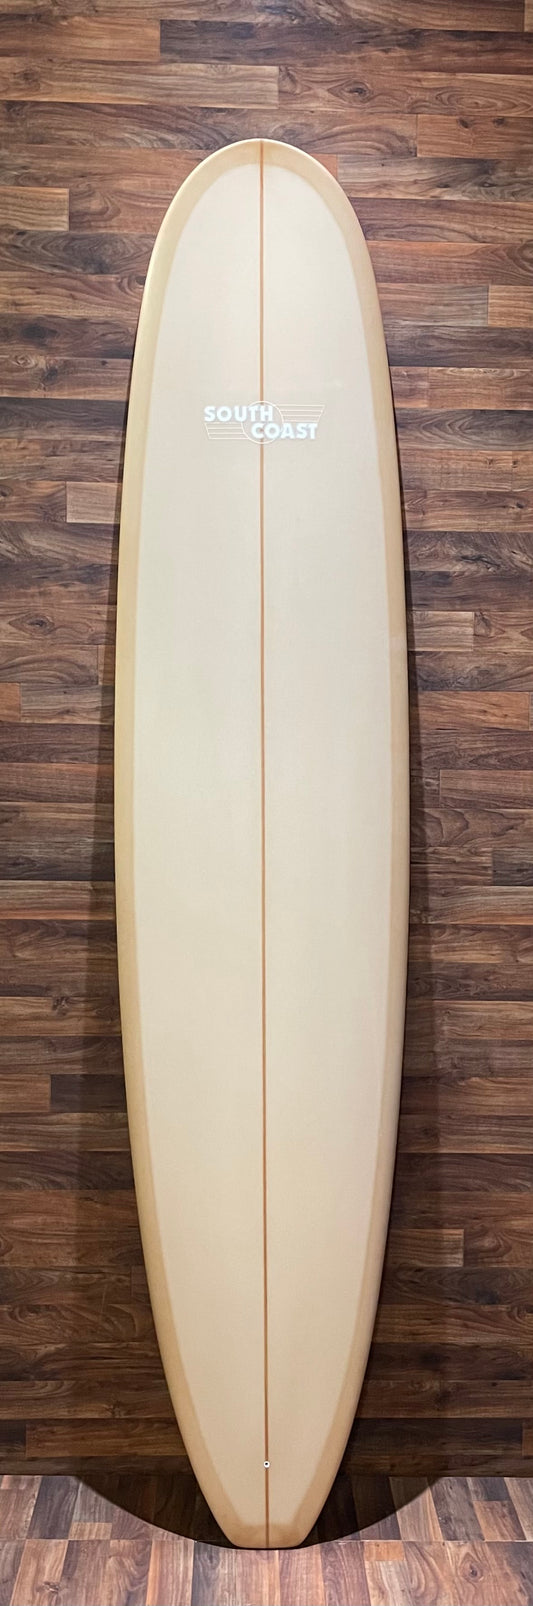 South Coast Cr3 Mini Surfboard 8'6"